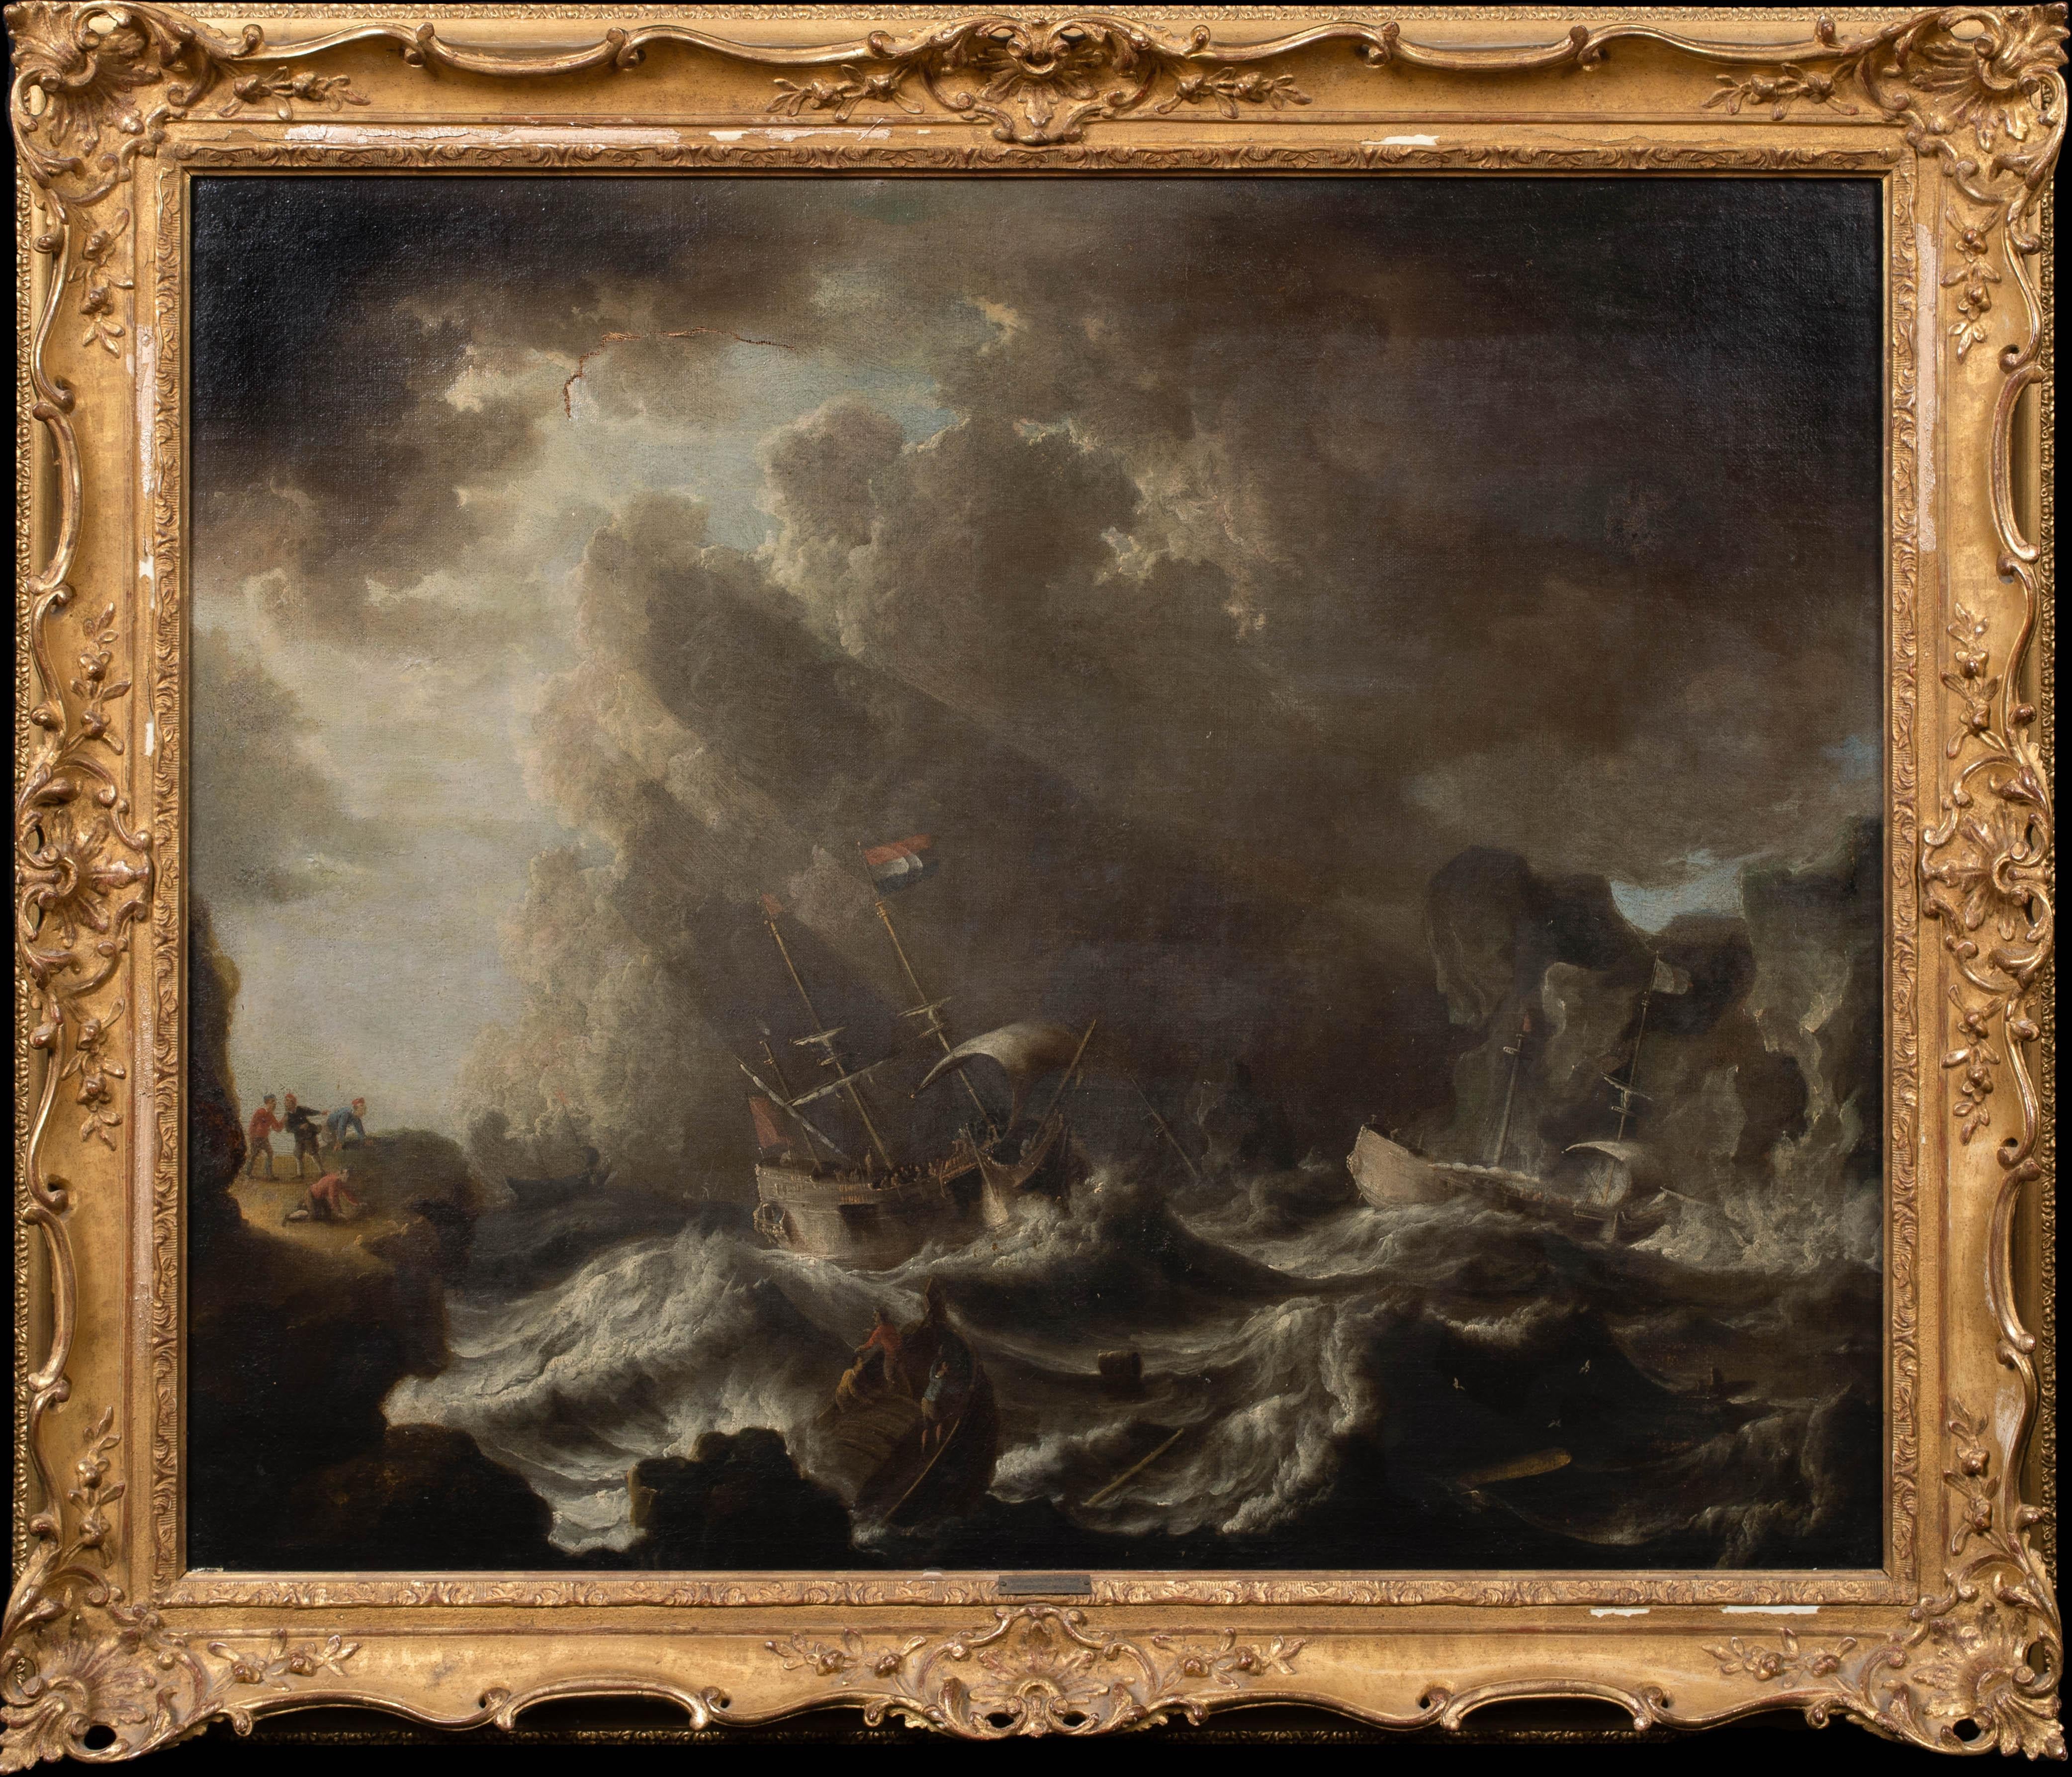 The Storm, 17th Century  by Bonaventura Peeters (1614-1652)  - Painting by Bonaventura Peeters the Elder